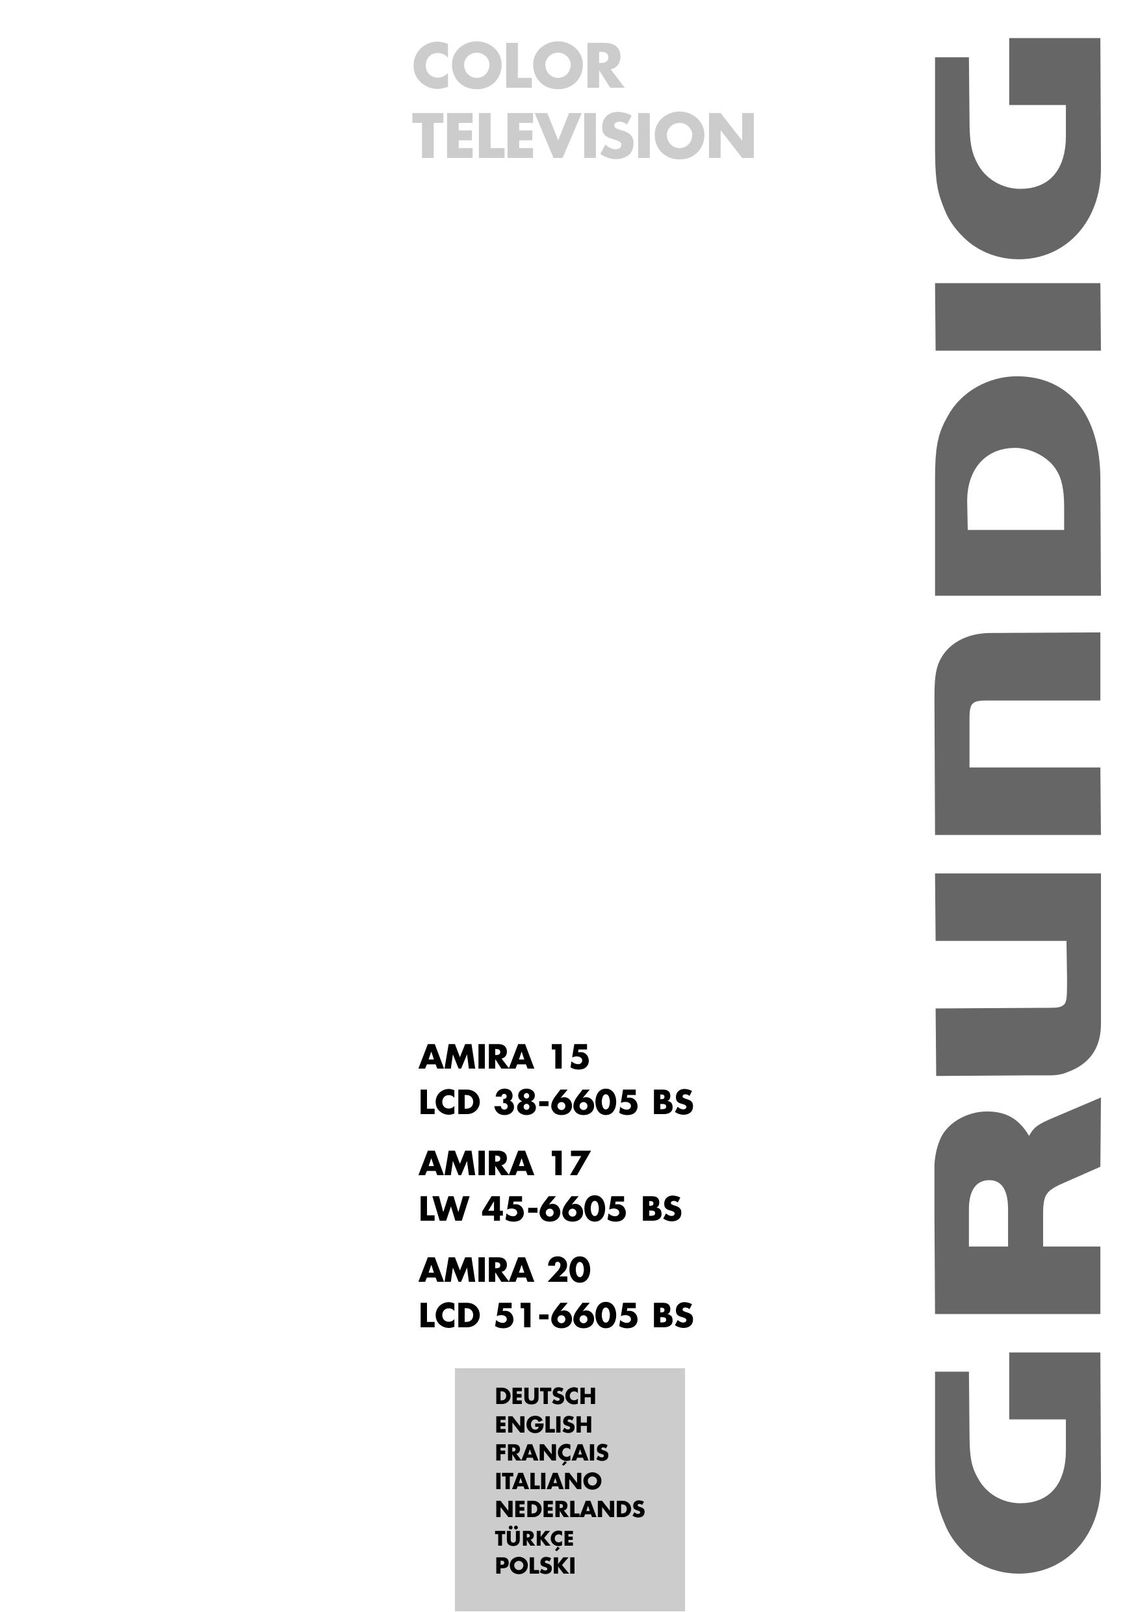 Grundig LCD 51-6605 BS CRT Television User Manual